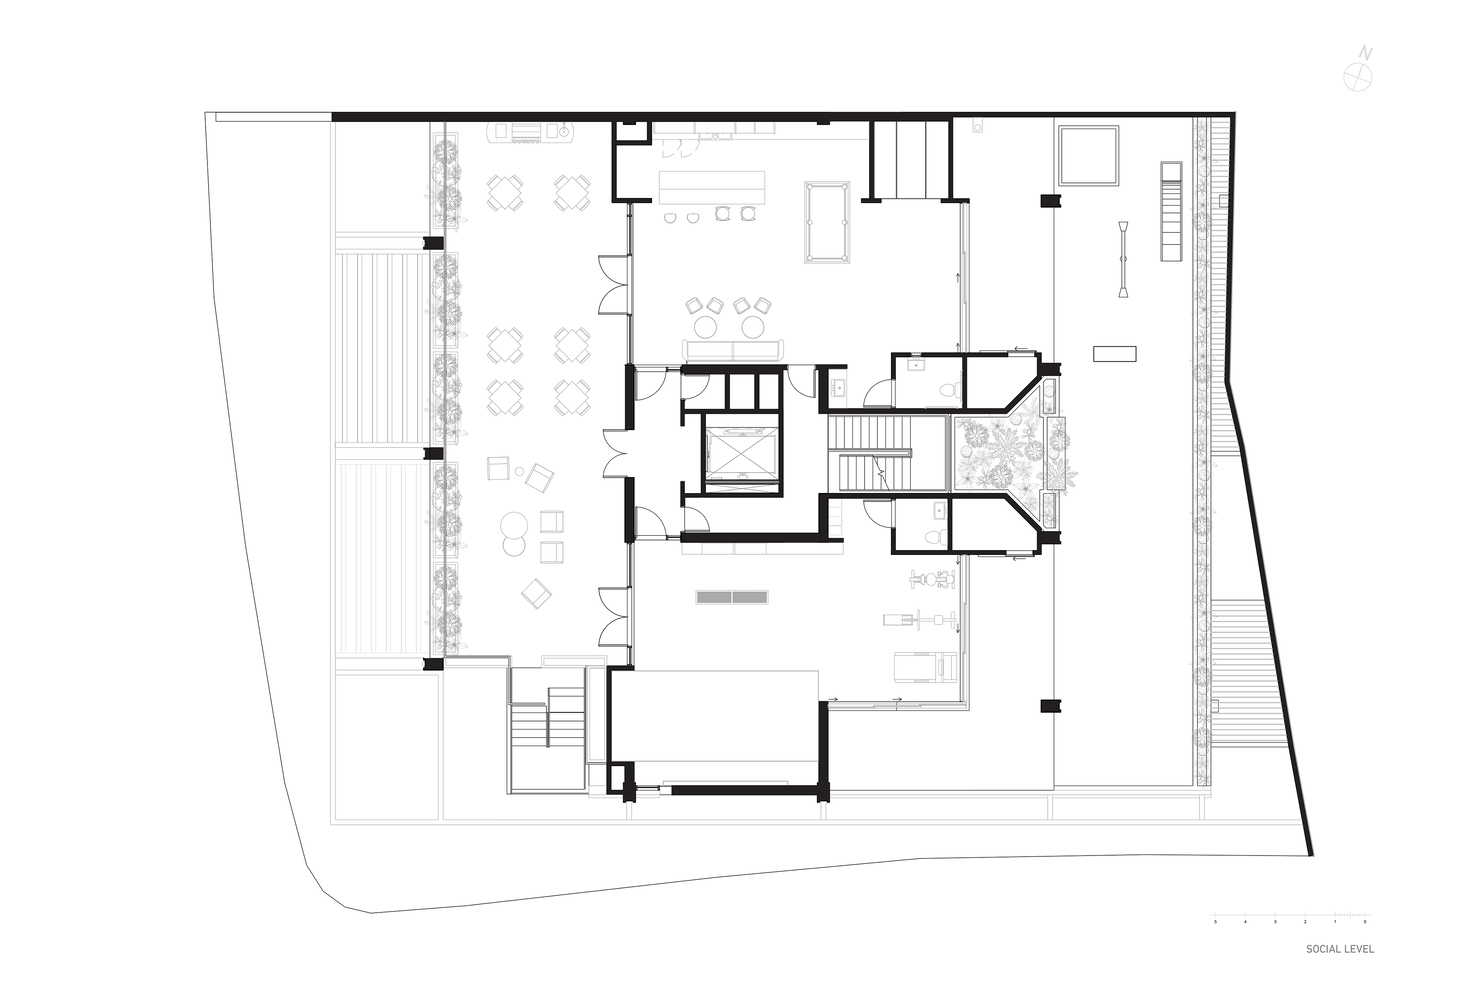 Studio Saxe,青年公寓,公寓,公寓設計案例,國外公寓設計,公寓設計方案